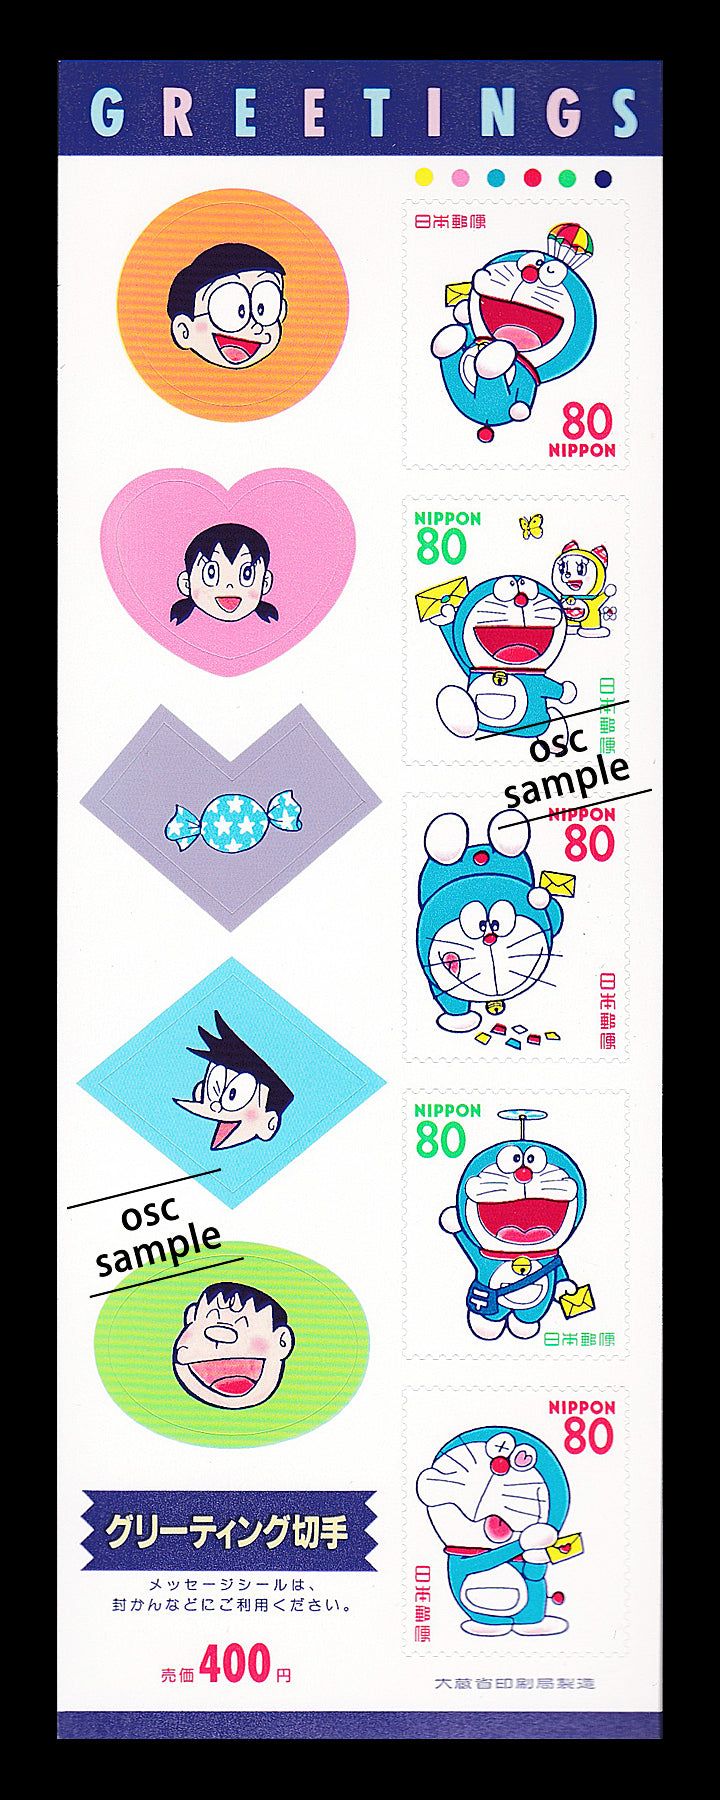 Doraemon (1997)